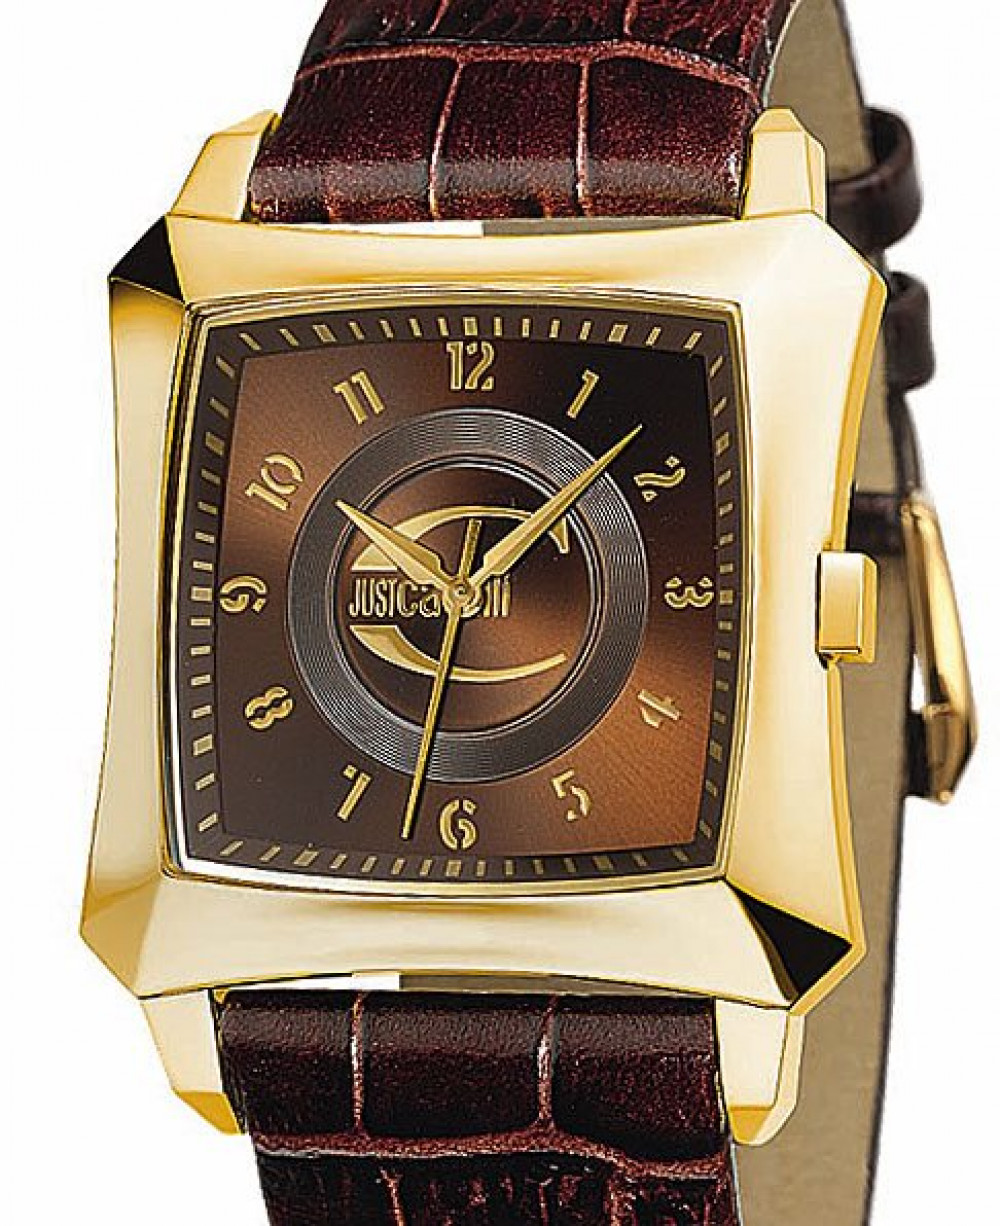 Zegarek firmy Just Cavalli Time, model Blade